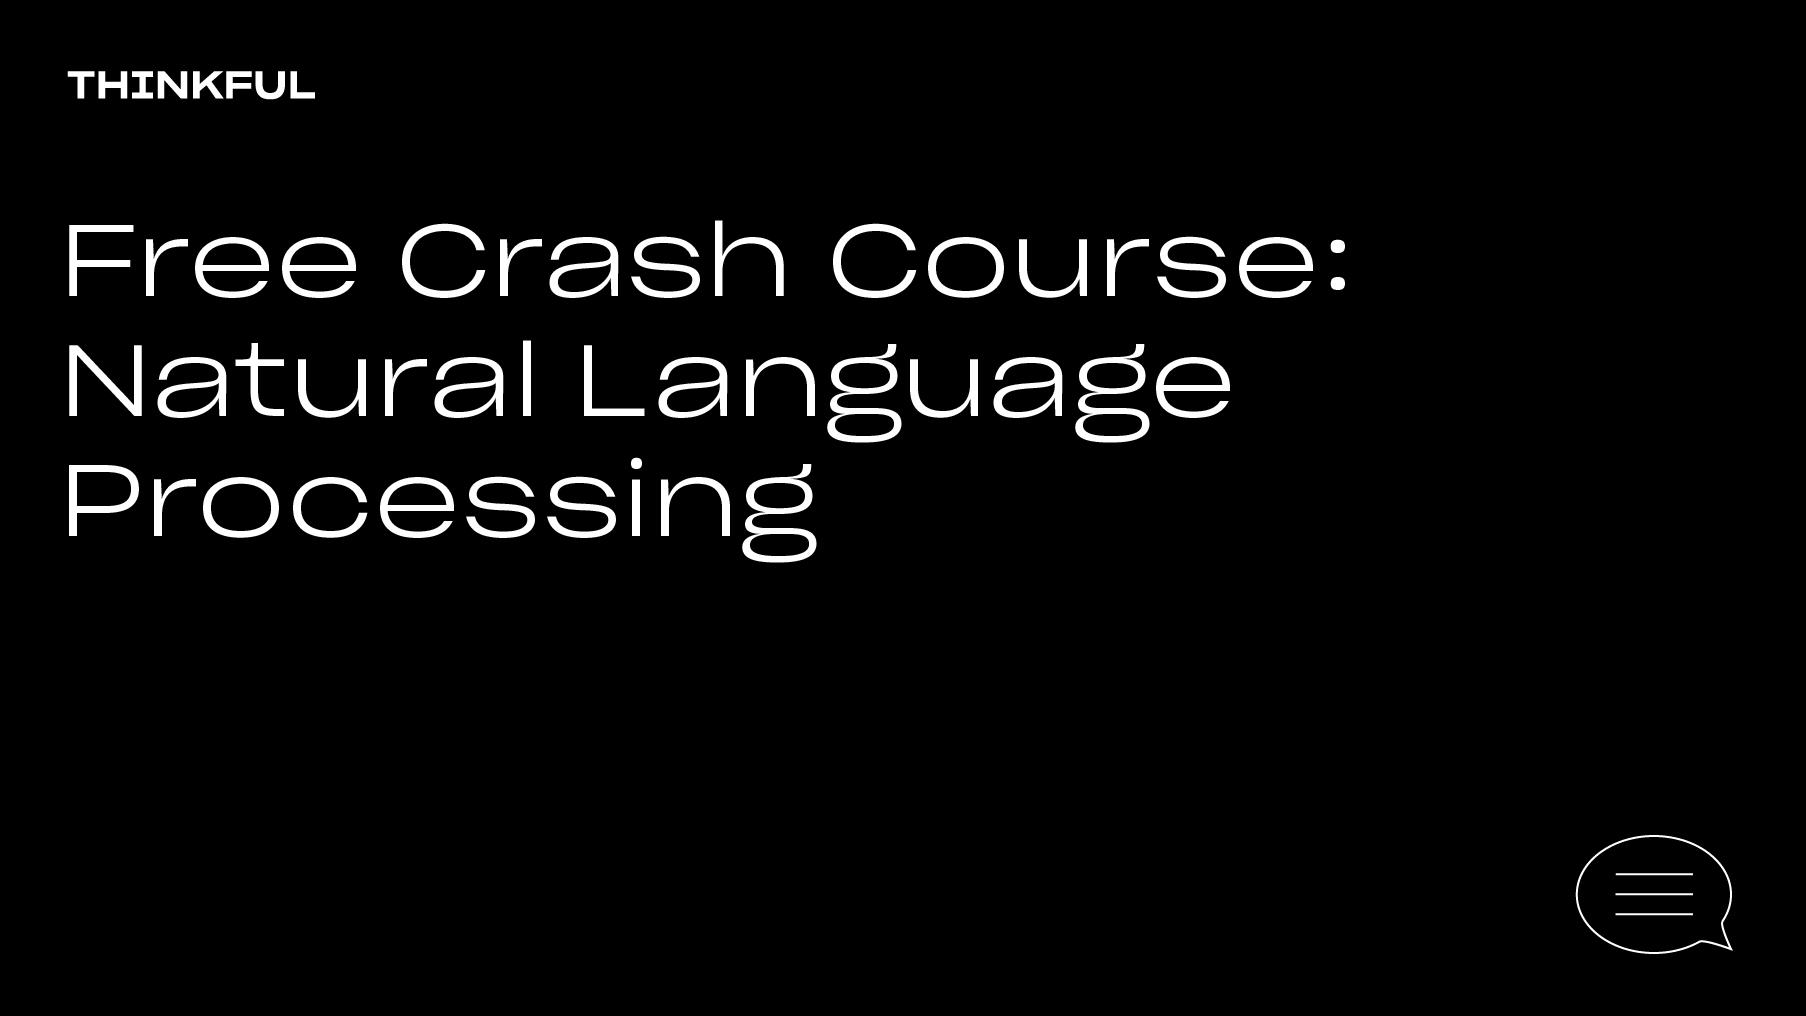 Thinkful Webinar | Free Crash Course: Natural Language Processing